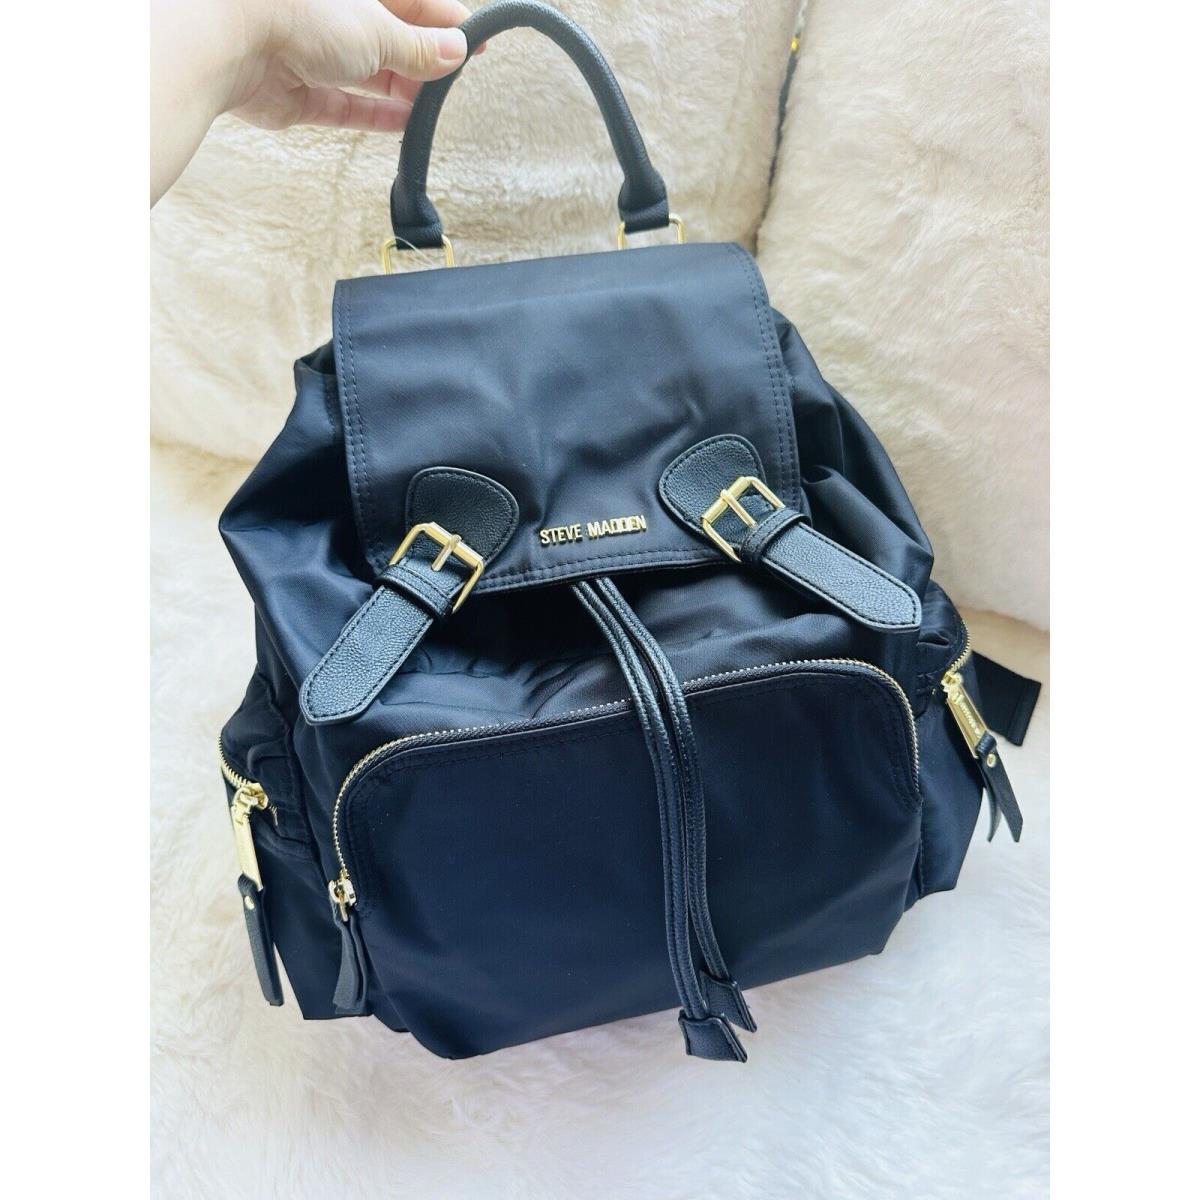 Steve Madden Bsolly Backpack Adjustable Straps Black Gold Burberry Dupe